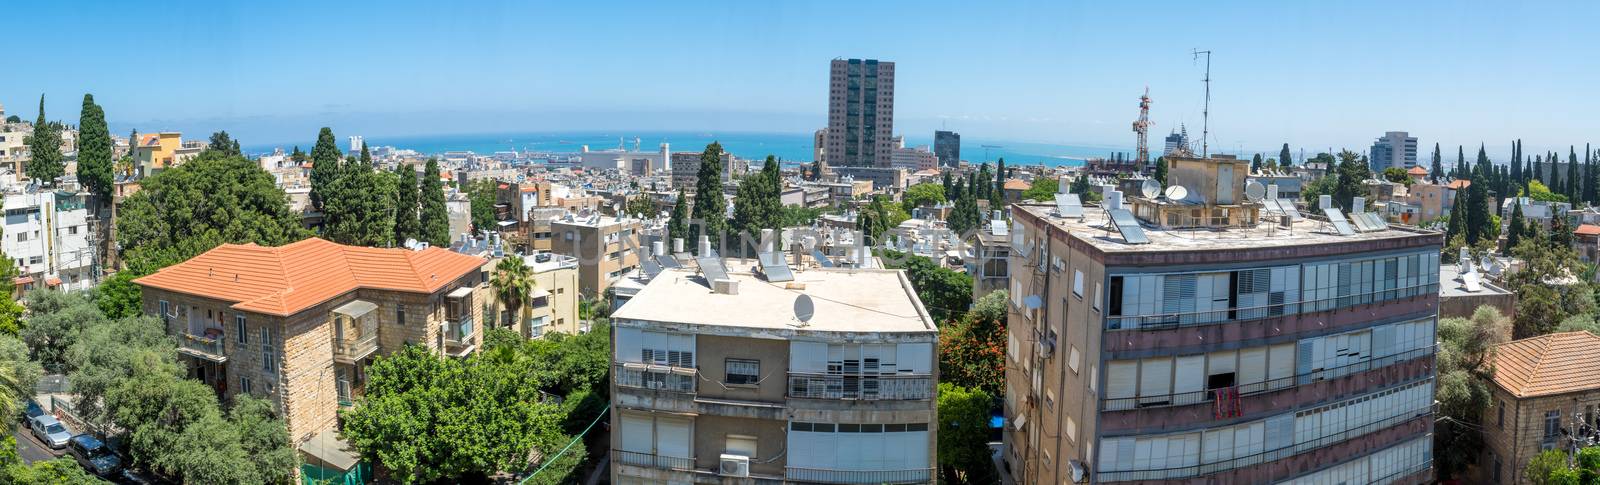 Panoramic view of the downtown, and the port from Hadar HaCarmel neighborhood, Haifa, Israel